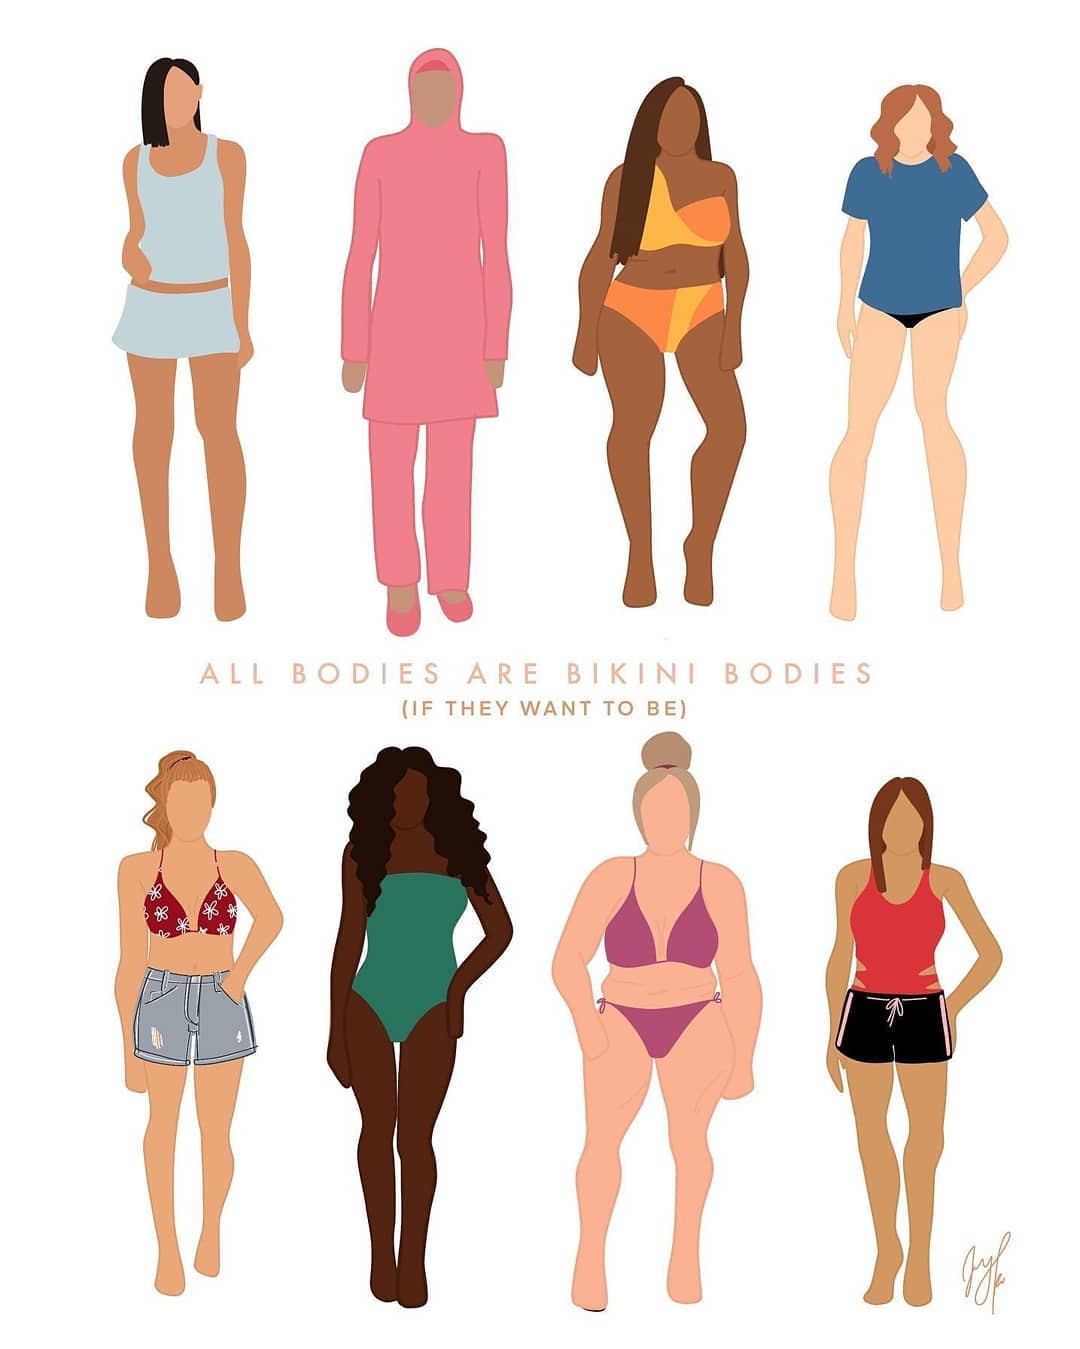 bruno banani Official - "All bodies are bikini bodies - if they want to be!"

Repost by: @chalkandleaves

#bikini #bikinibody #positivevibes #positivity #attitude